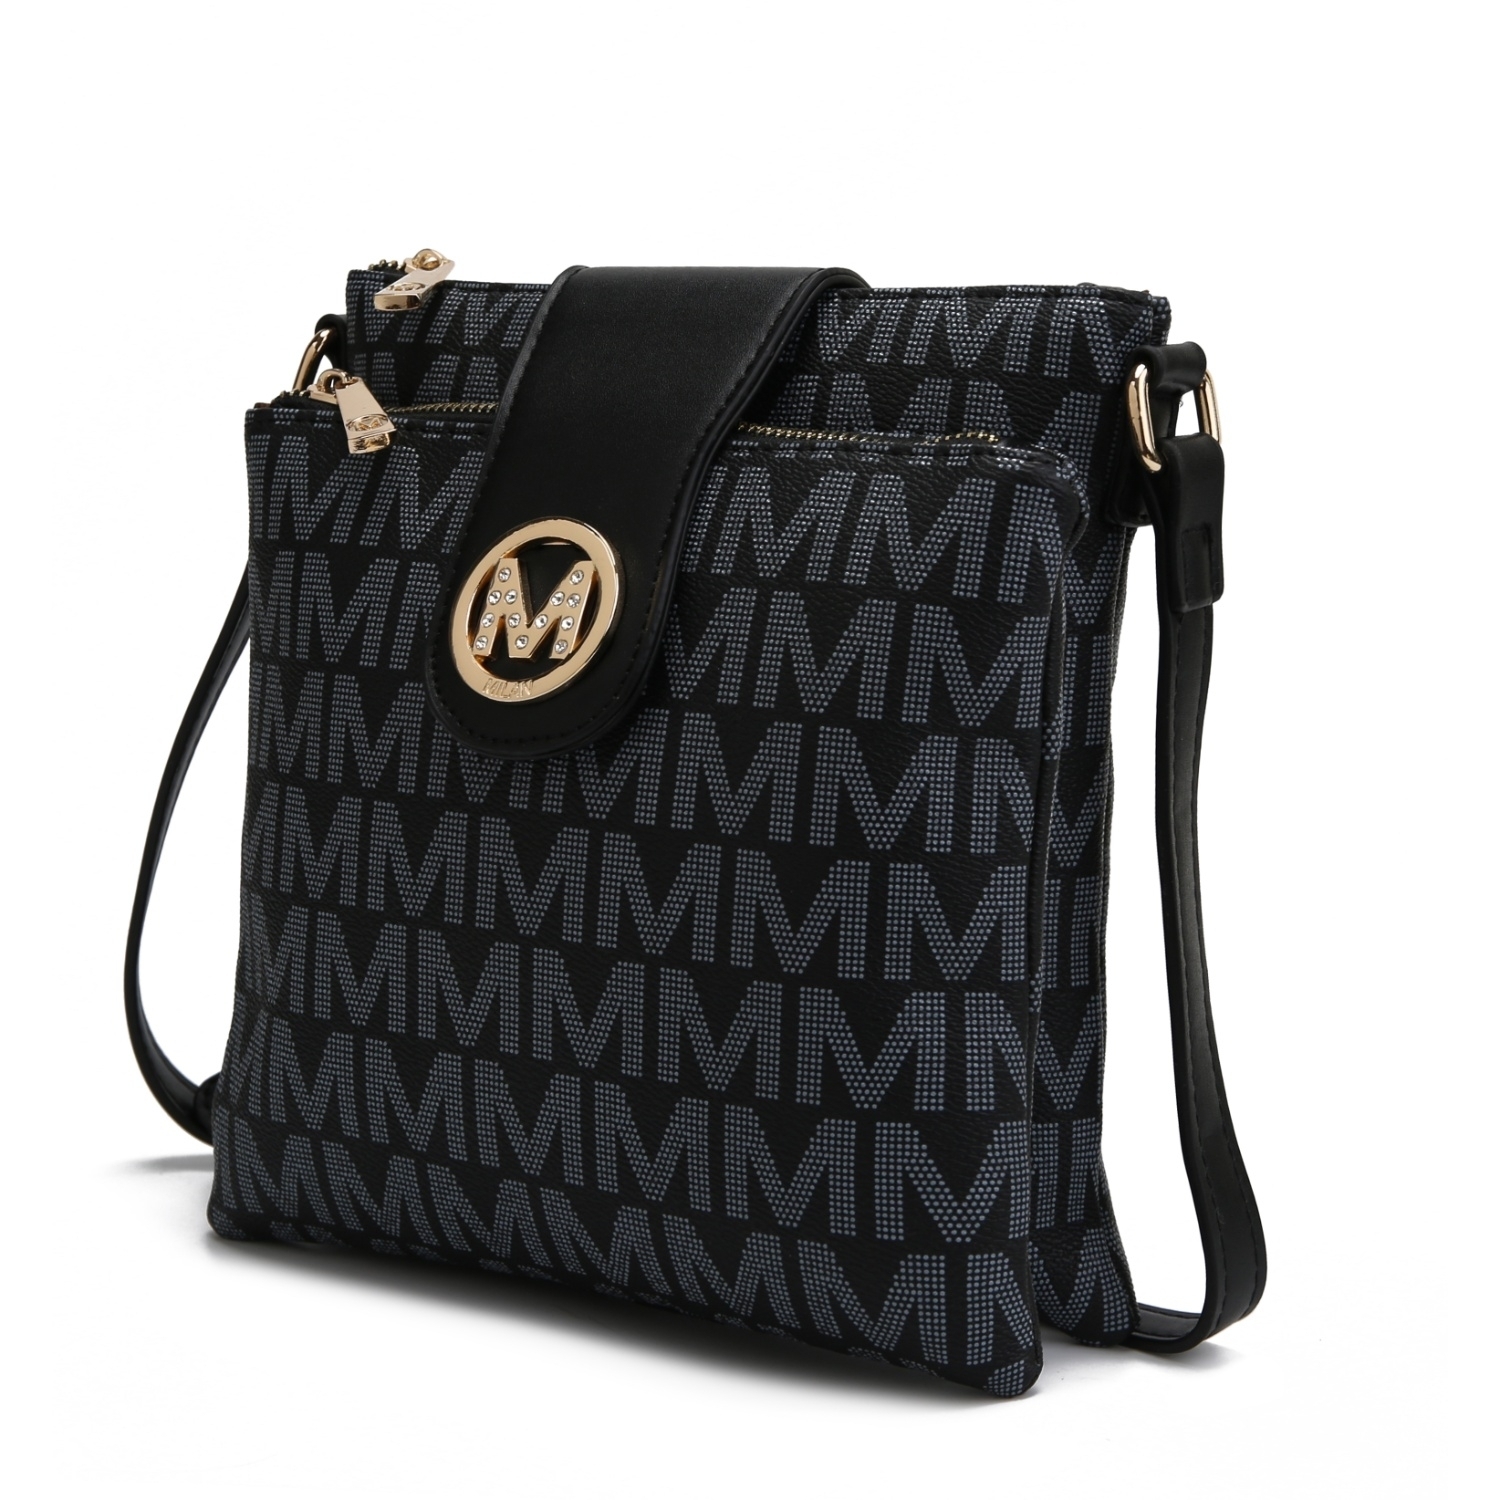 MKF Collection Wrigley M Signature Crossbody Handbag By Mia K. - Brown